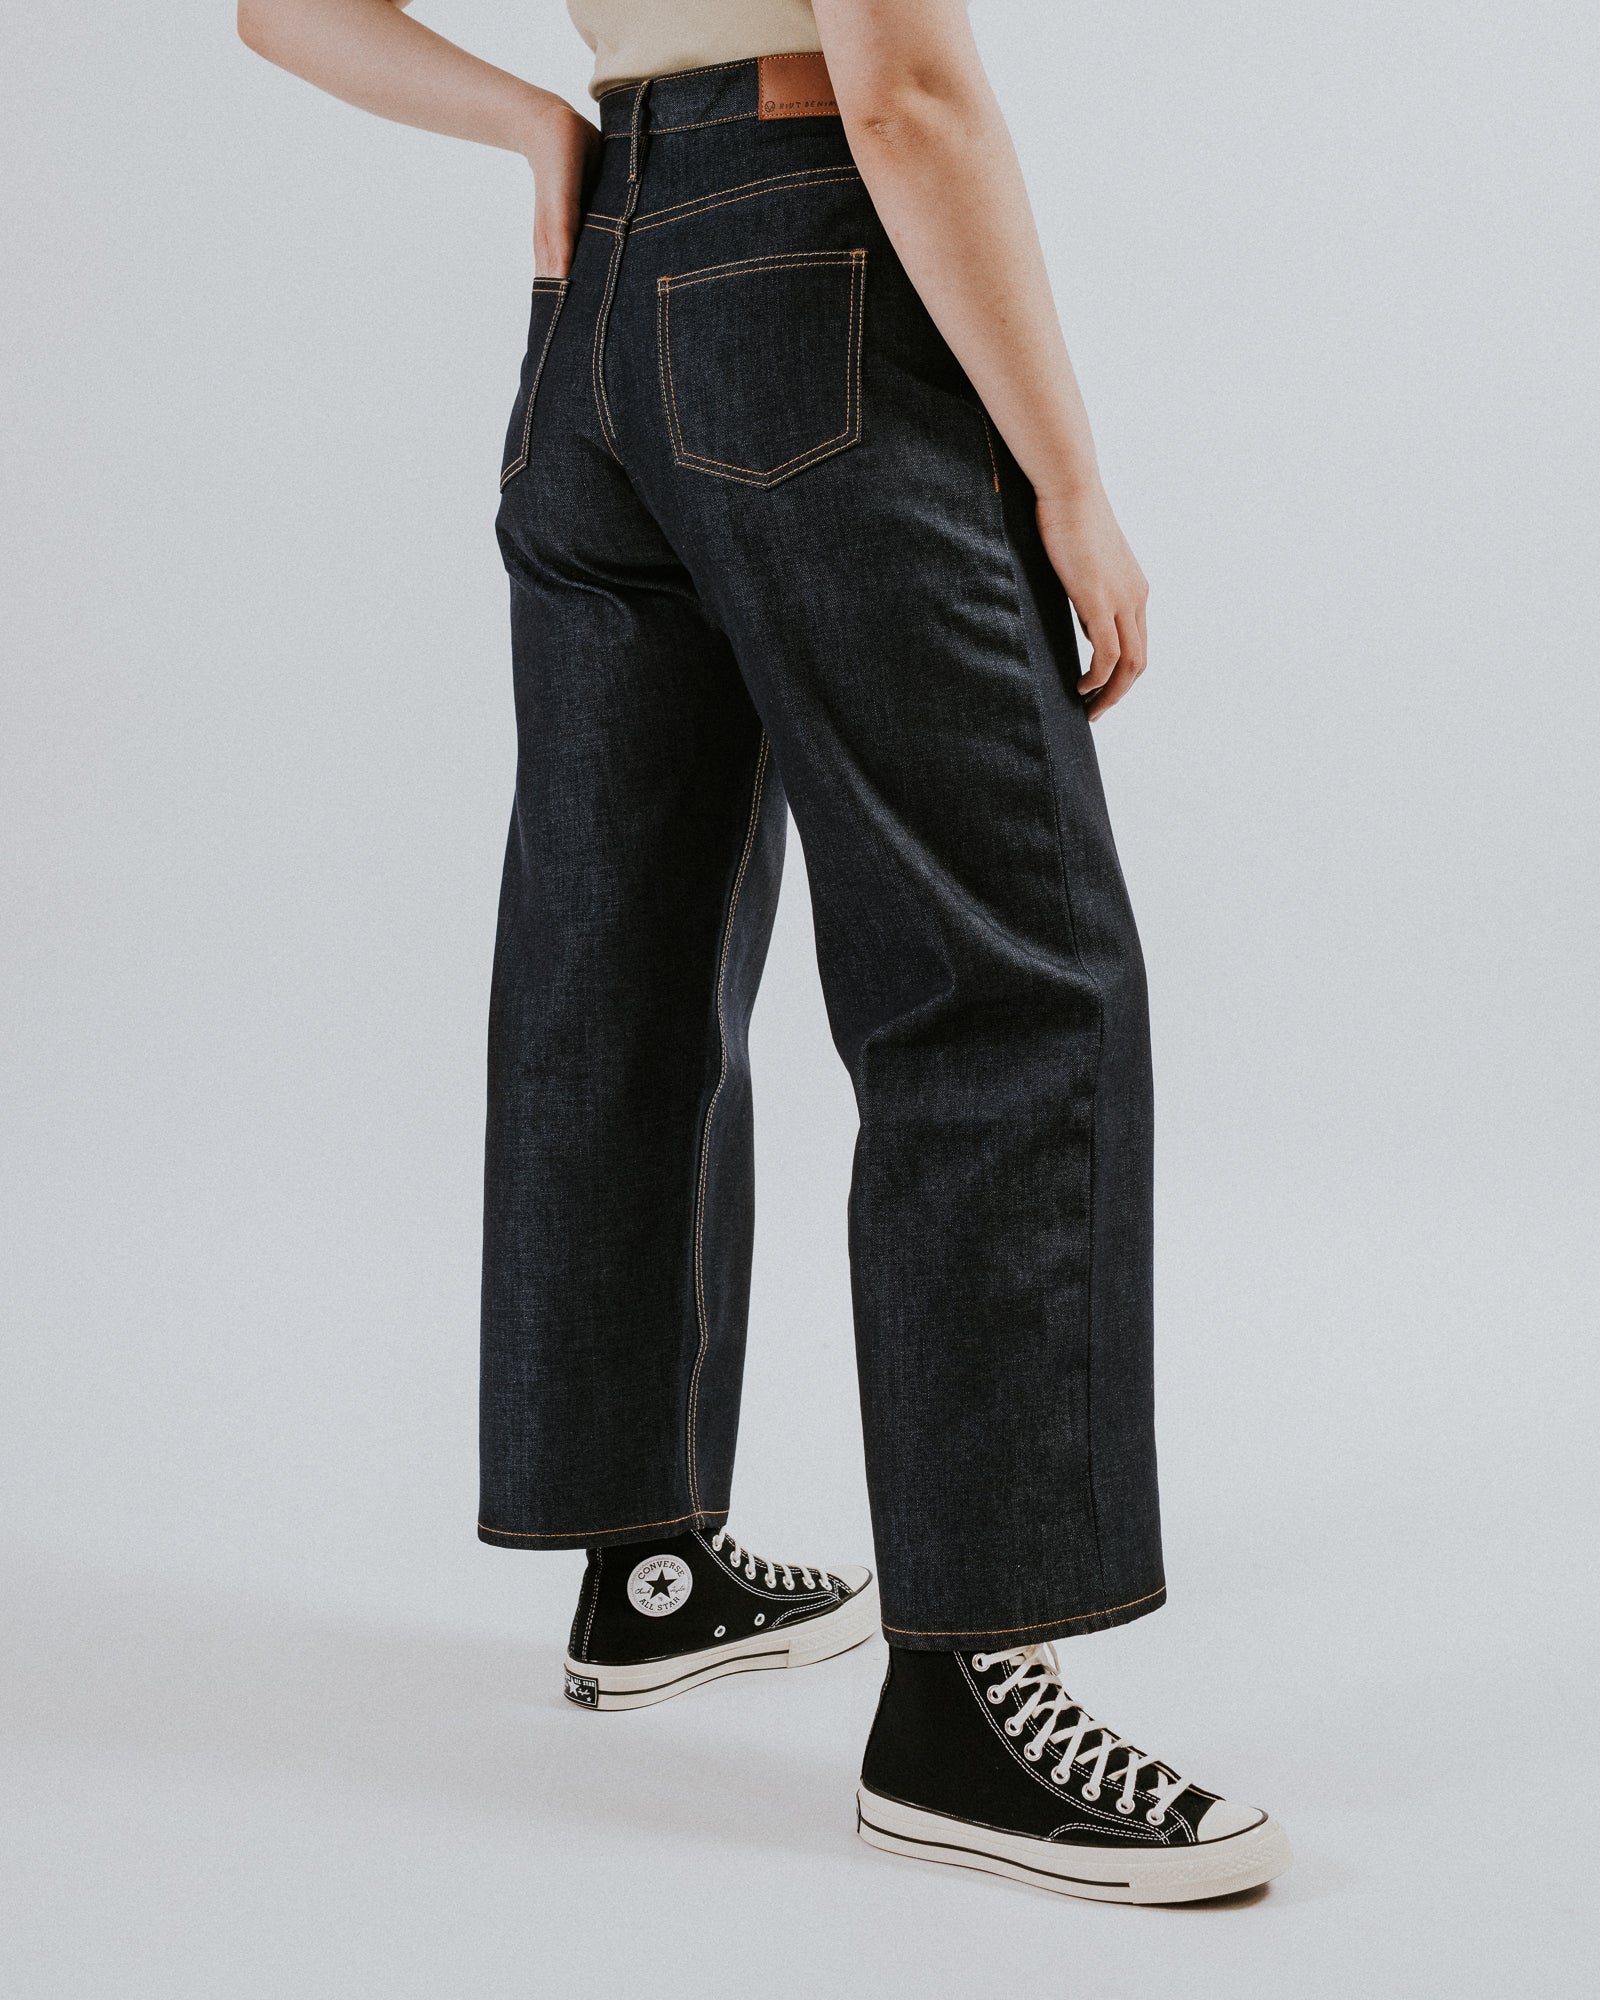 SkinR Selvedge Jeans Indigo - Hiut | Rivet & Hide